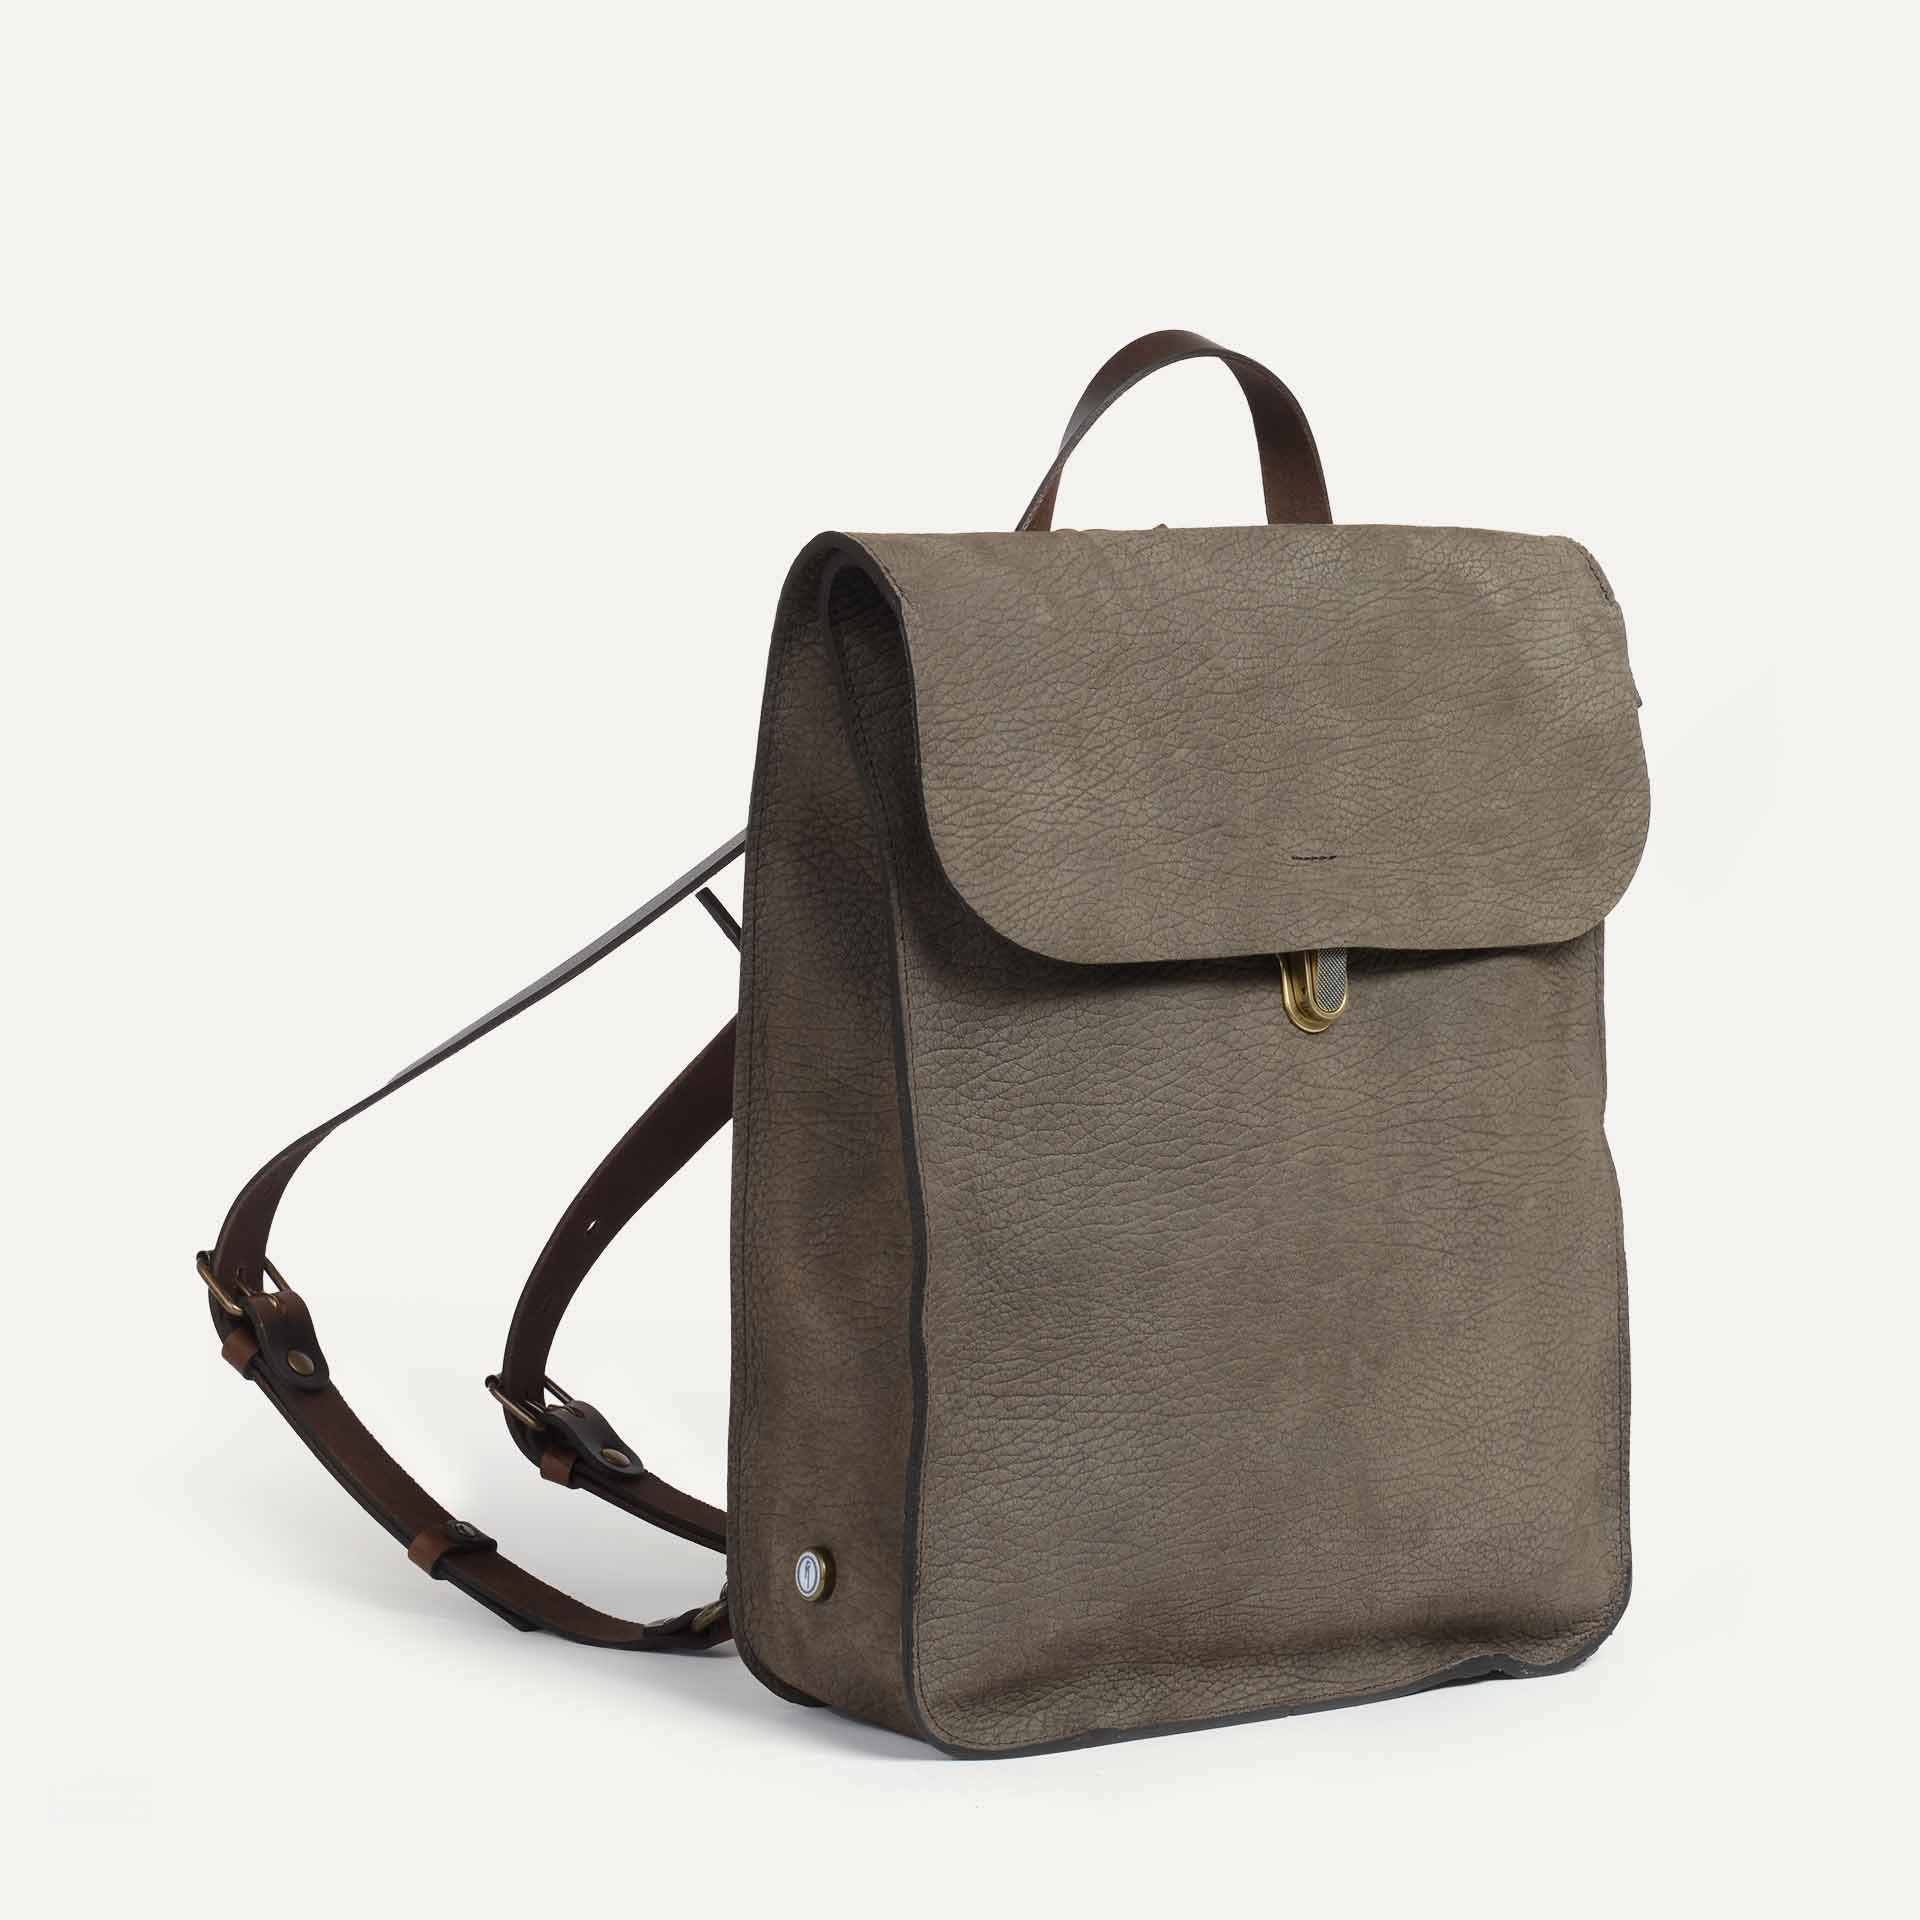 Puncho leather backpack - Khaki Brown / E Pure (image n°2)